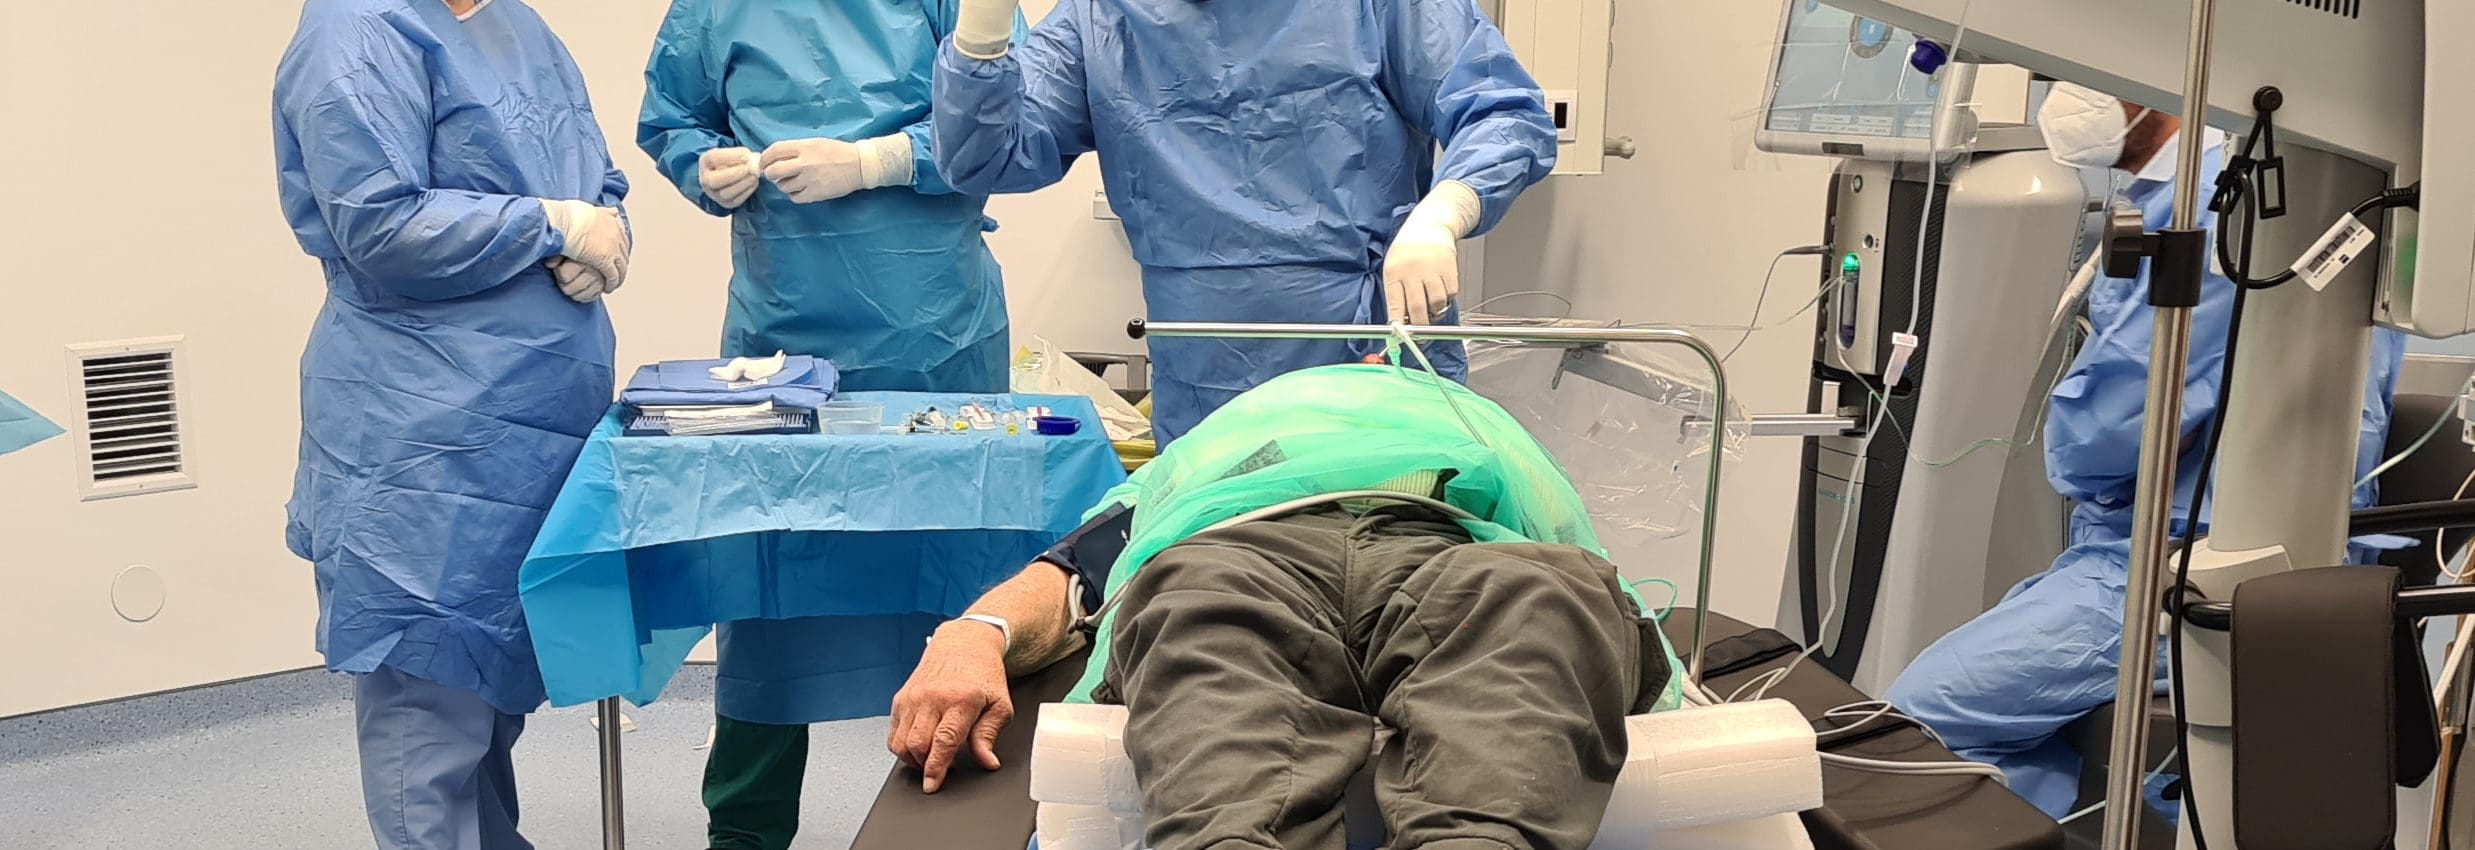 Eordaialive.com - Τα Νέα της Πτολεμαΐδας, Εορδαίας, Κοζάνης Μποδοσάκειο Νοσοκομείο Πτολεμαΐδας: Ξεκινά για πρώτη φορά η λειτουργία των Χειρουργείων Ημέρας